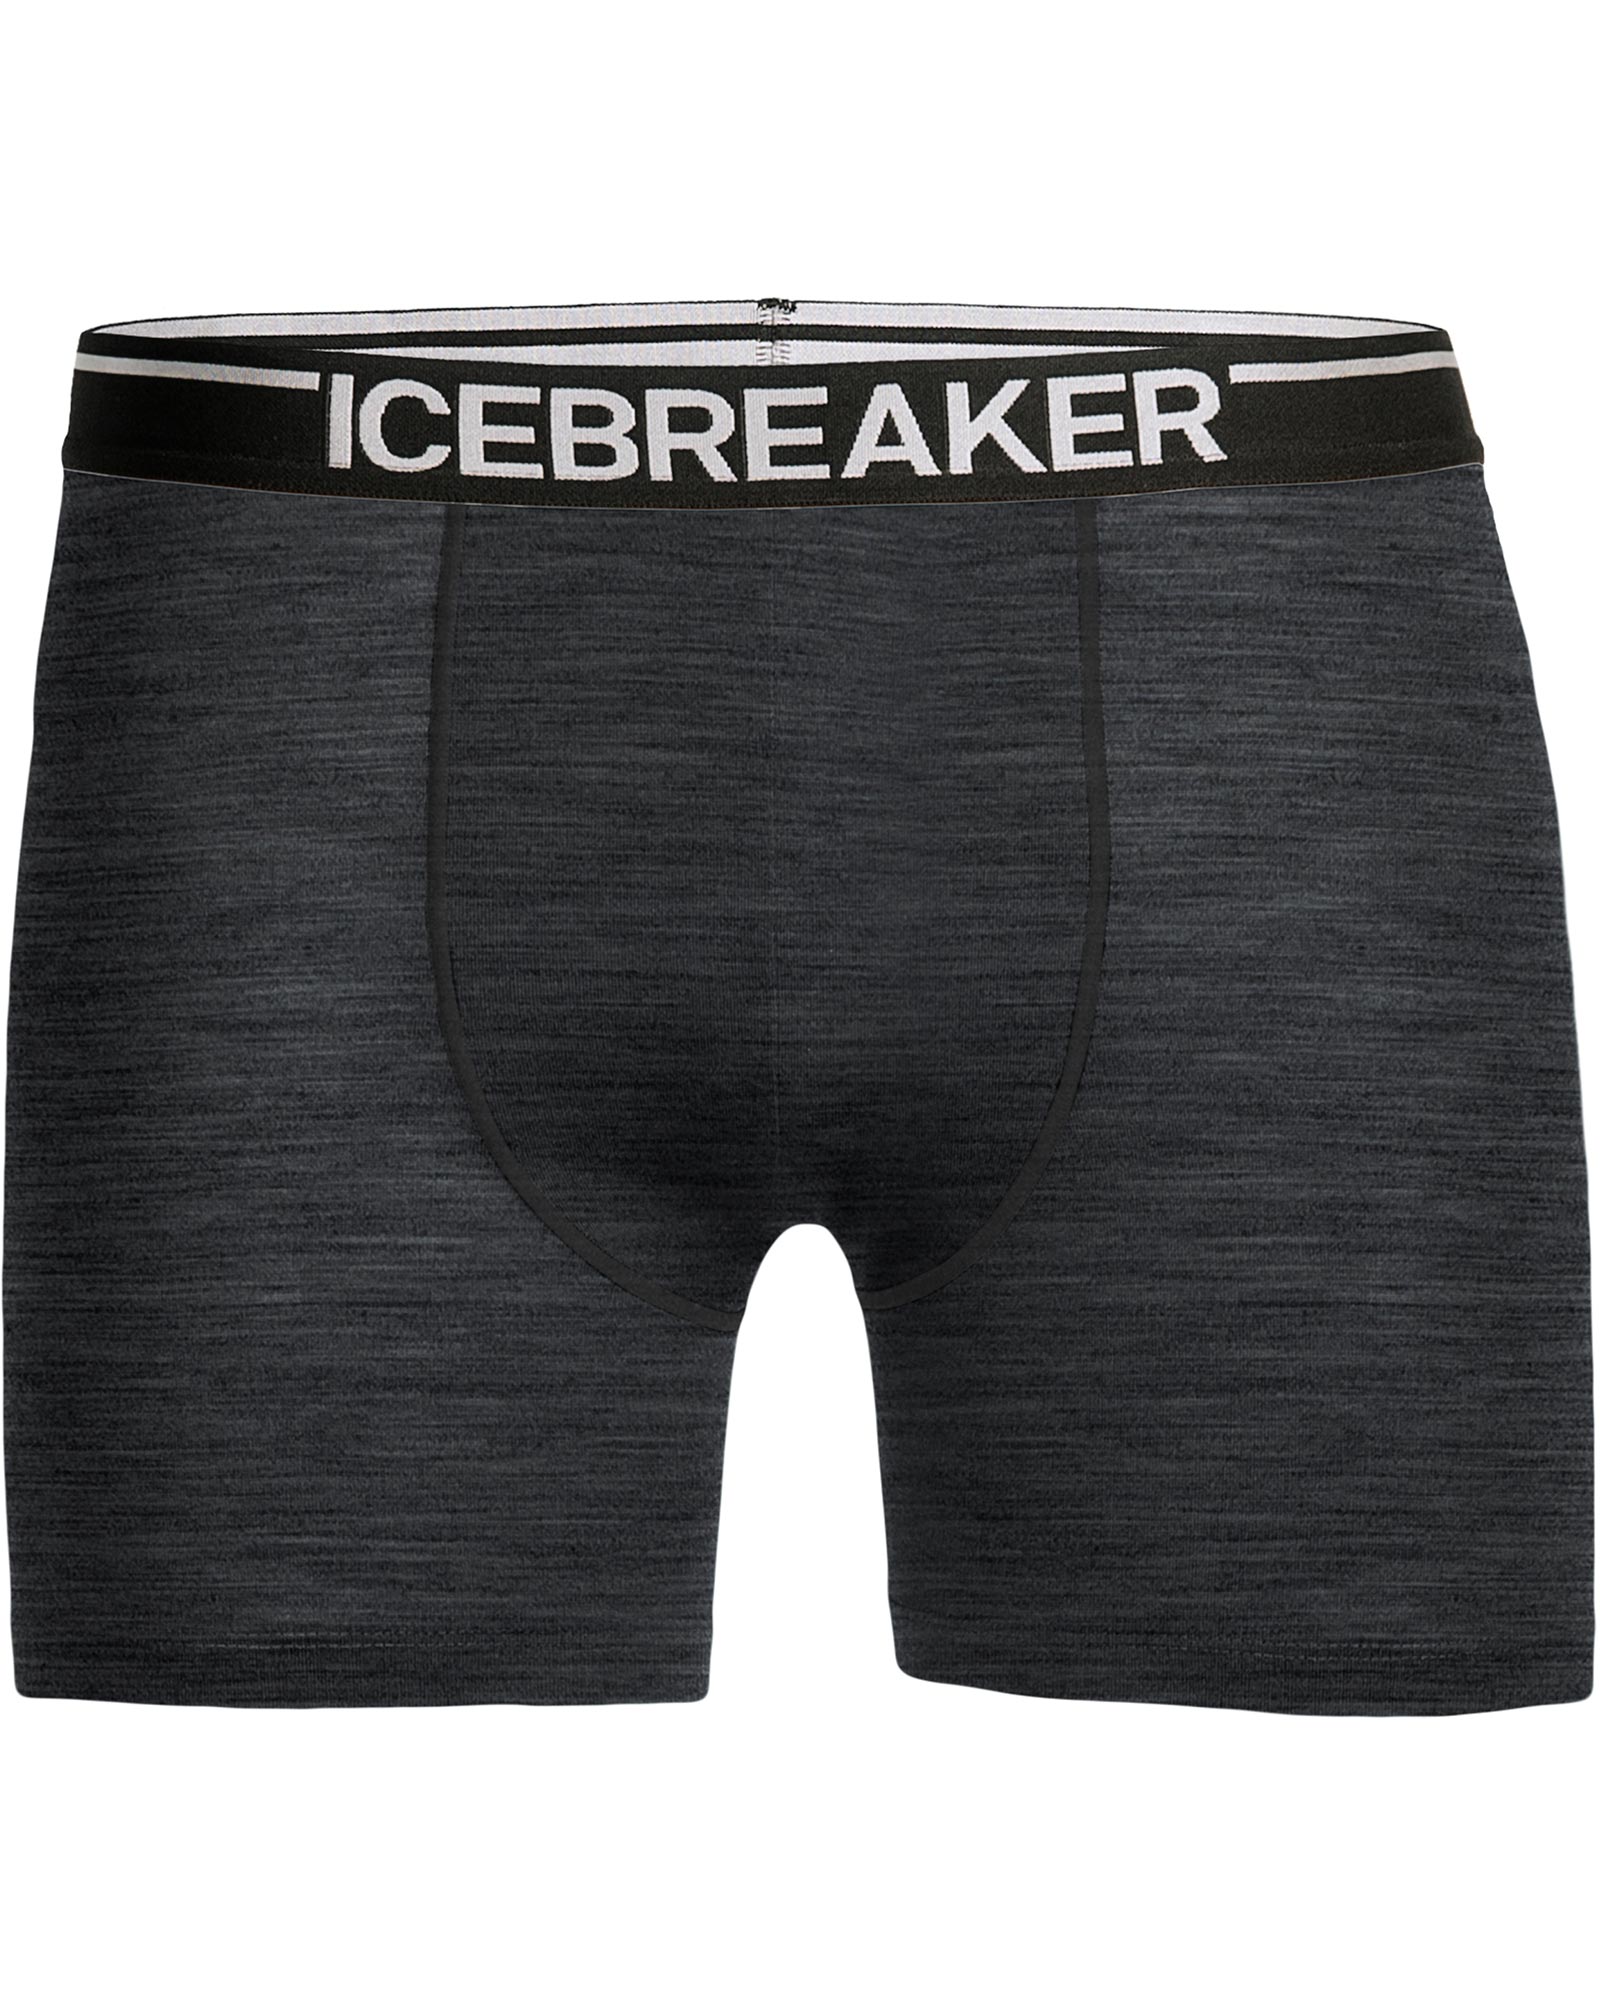 Icebreaker Anatomica Merino Boxers